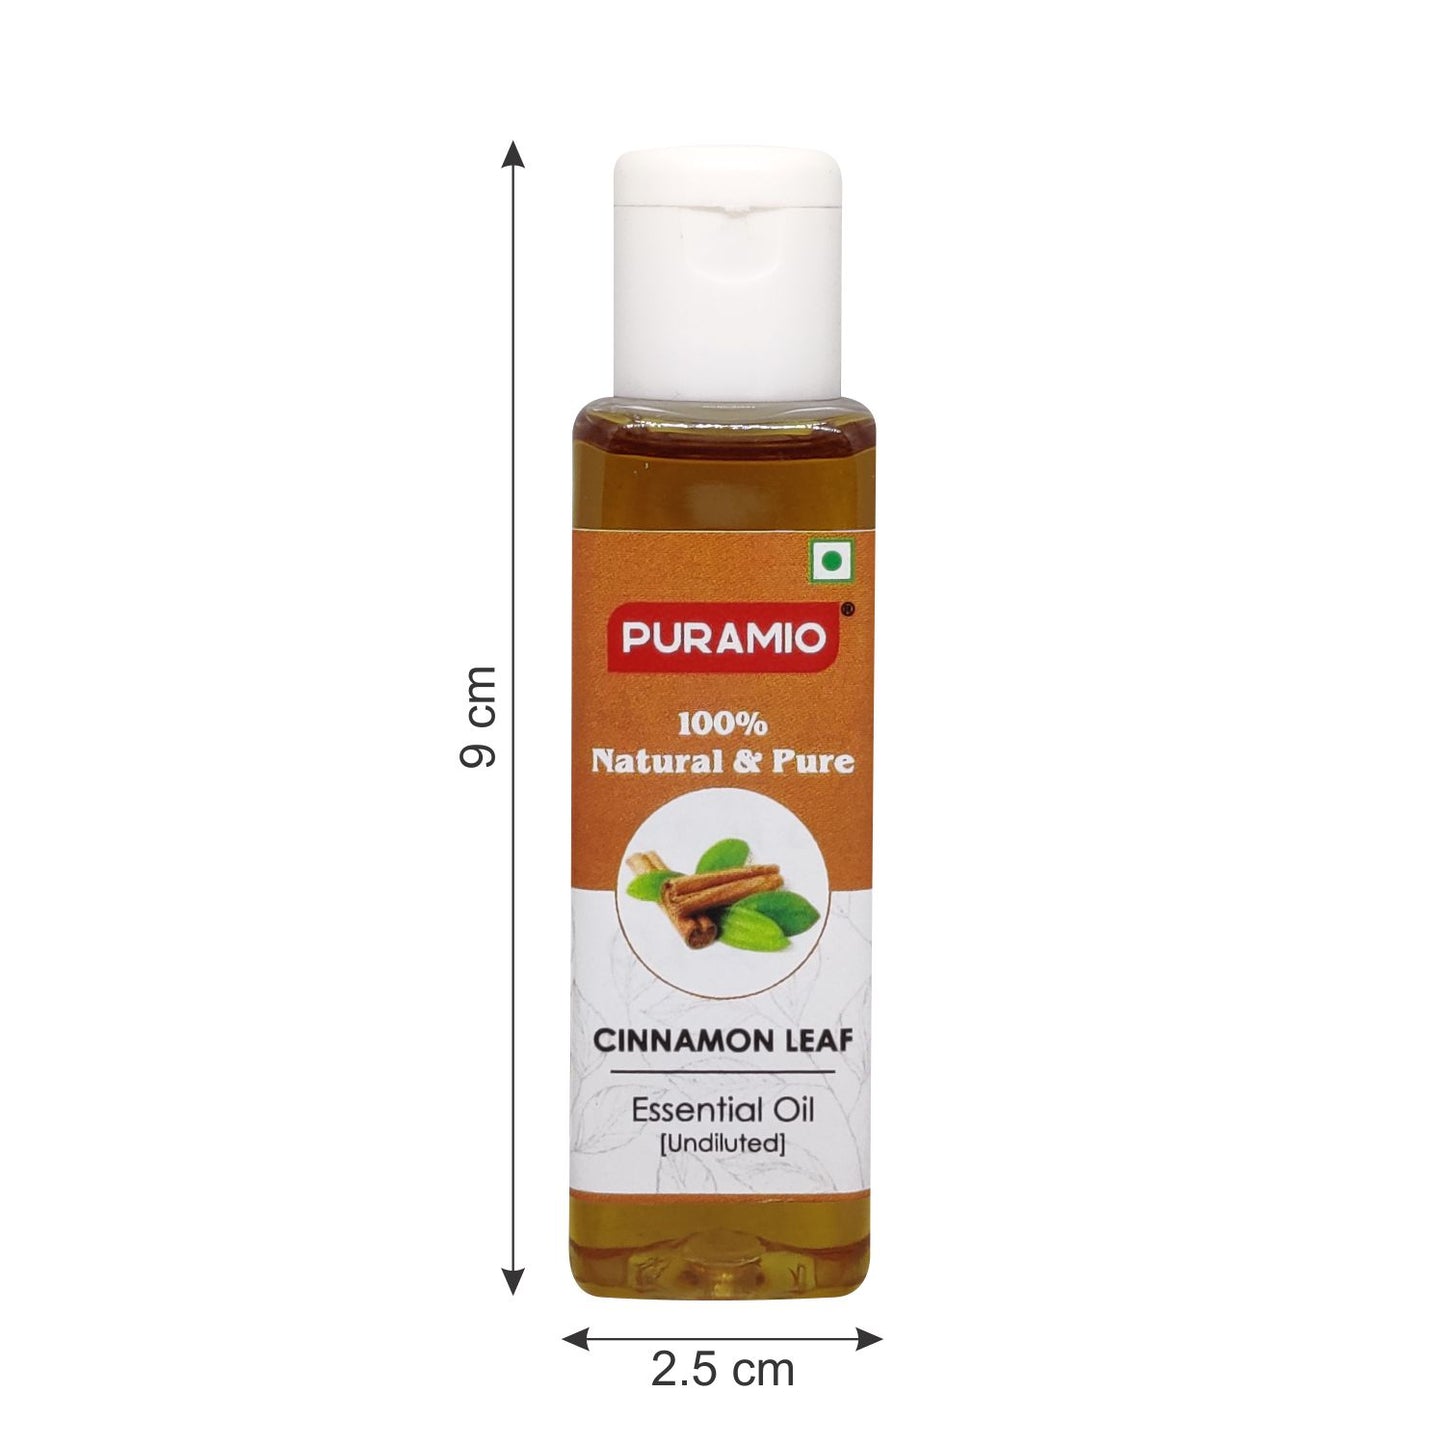 Puramio Cinnamon Leaf Essential Oil [Undiluted]100% Natural & Pure, 30ml